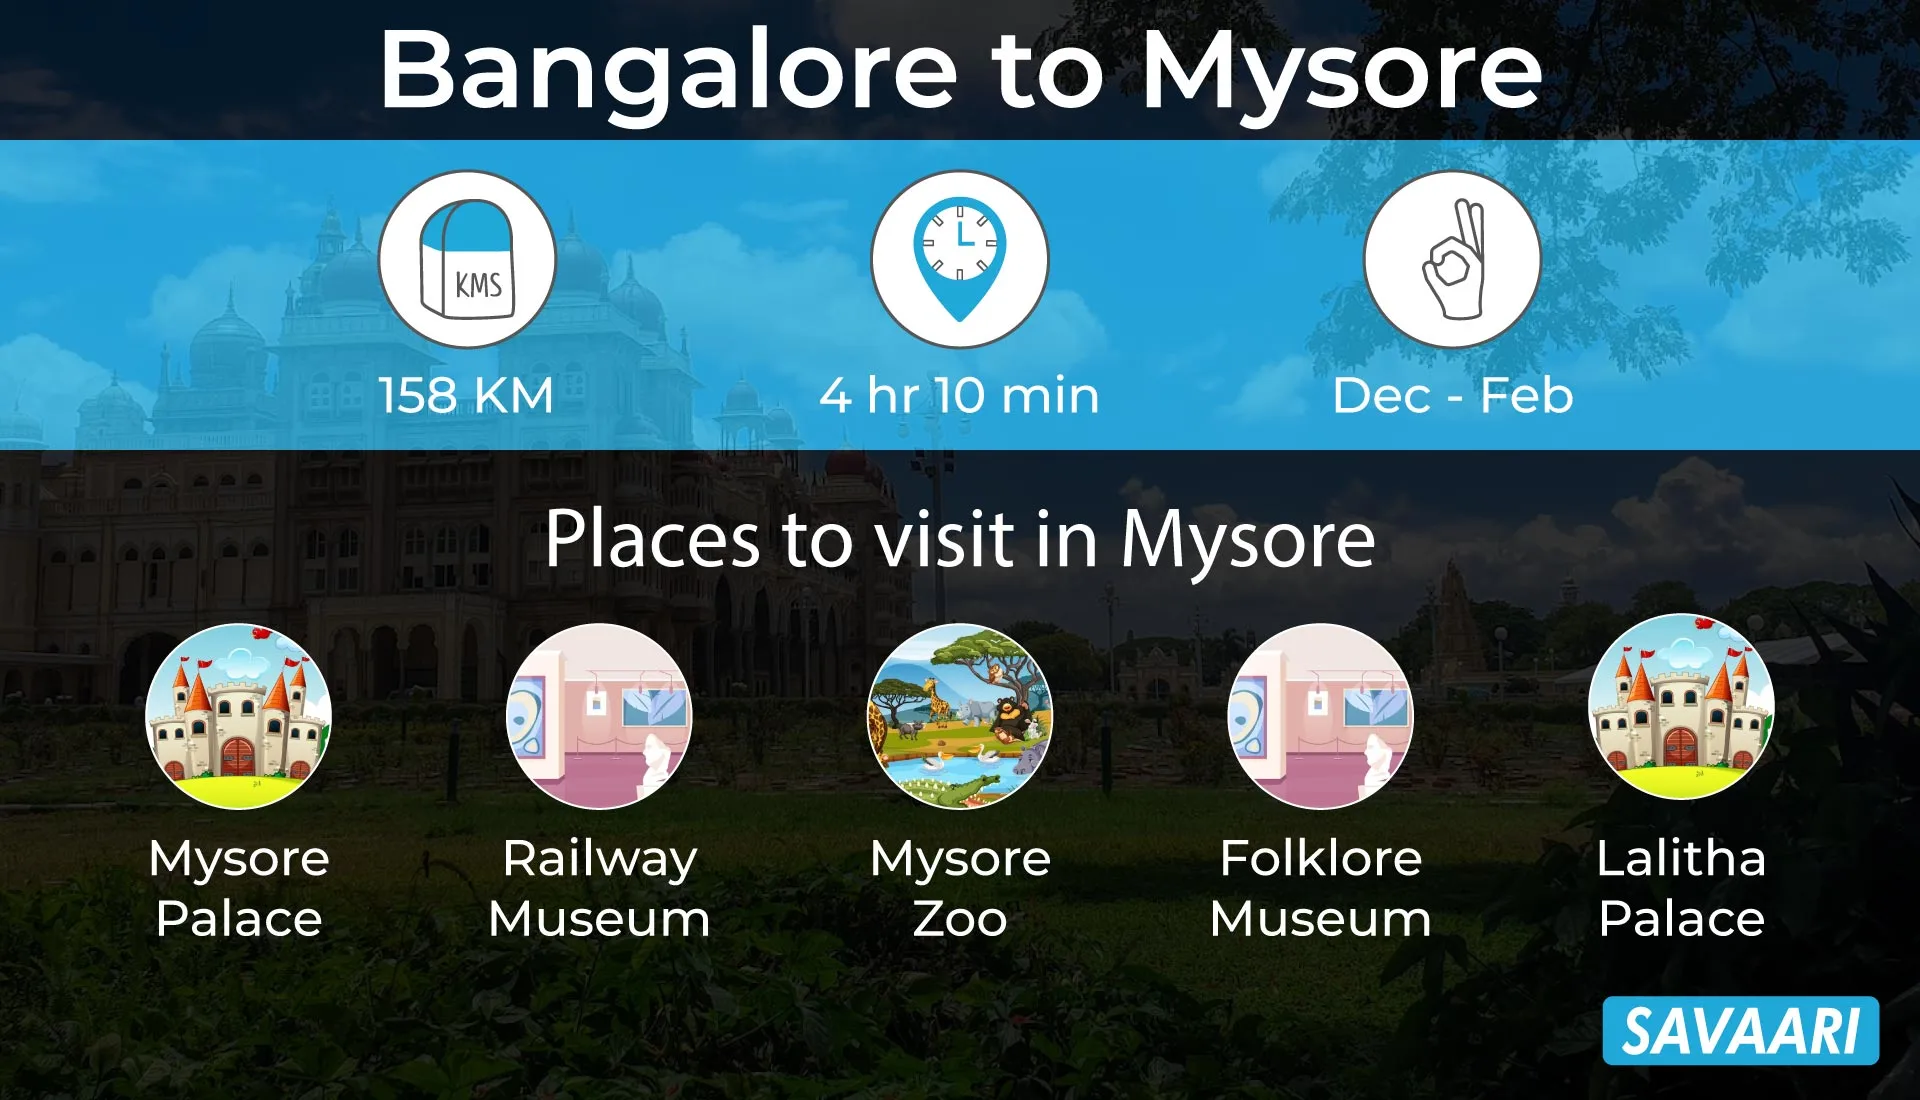 Bangalore to Mysore road trip